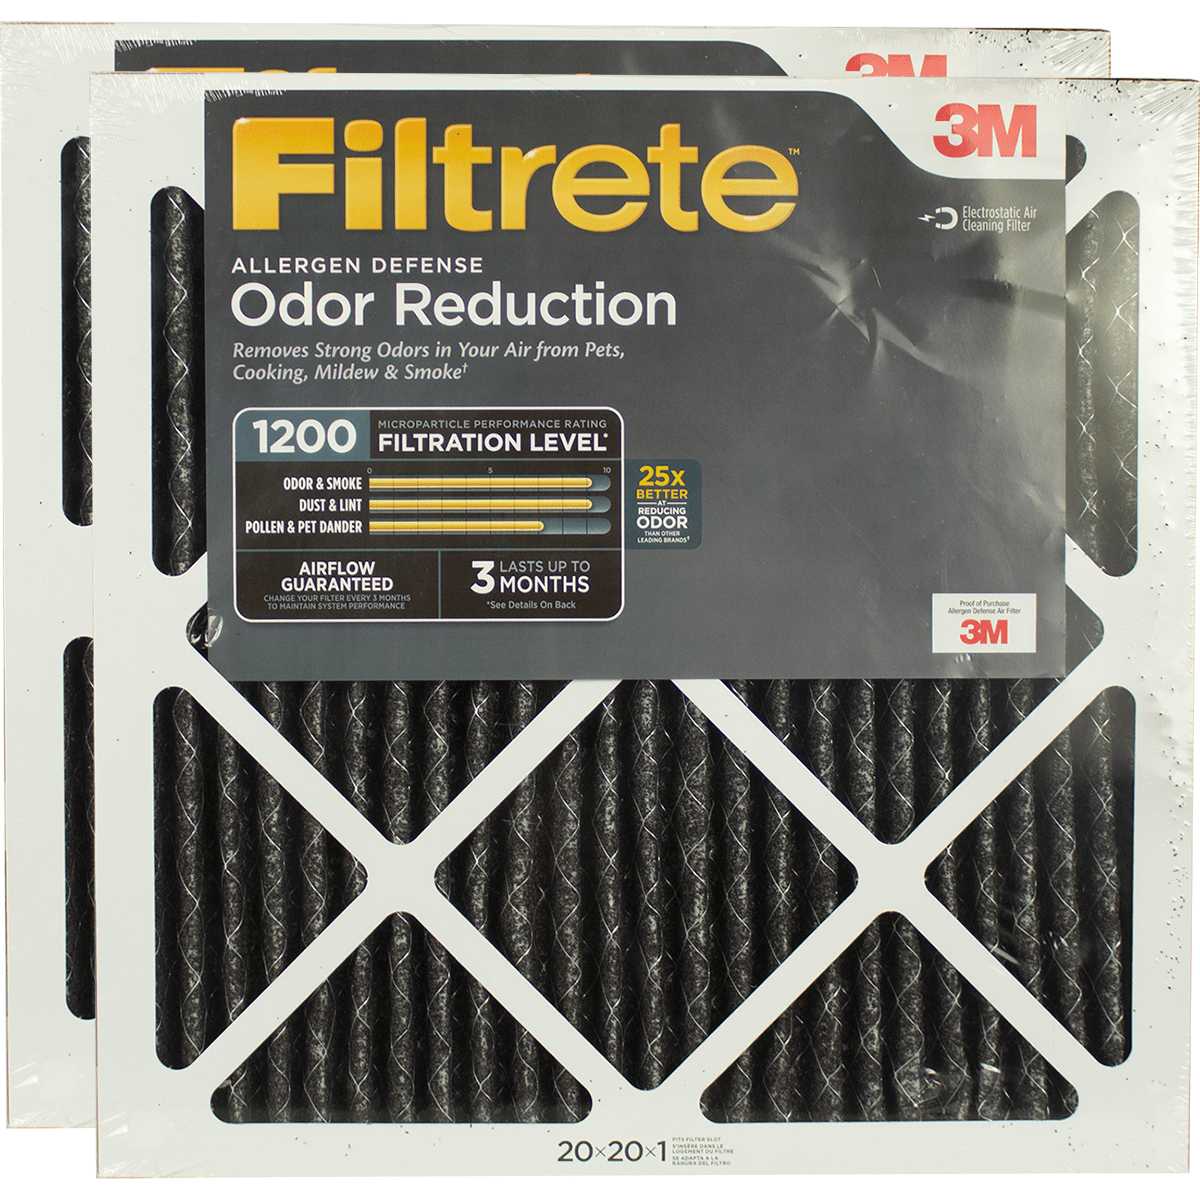 3m Filtrete 1200 Mpr Allergen Defense Odor Reduction Filters 20x20x1 2-pack